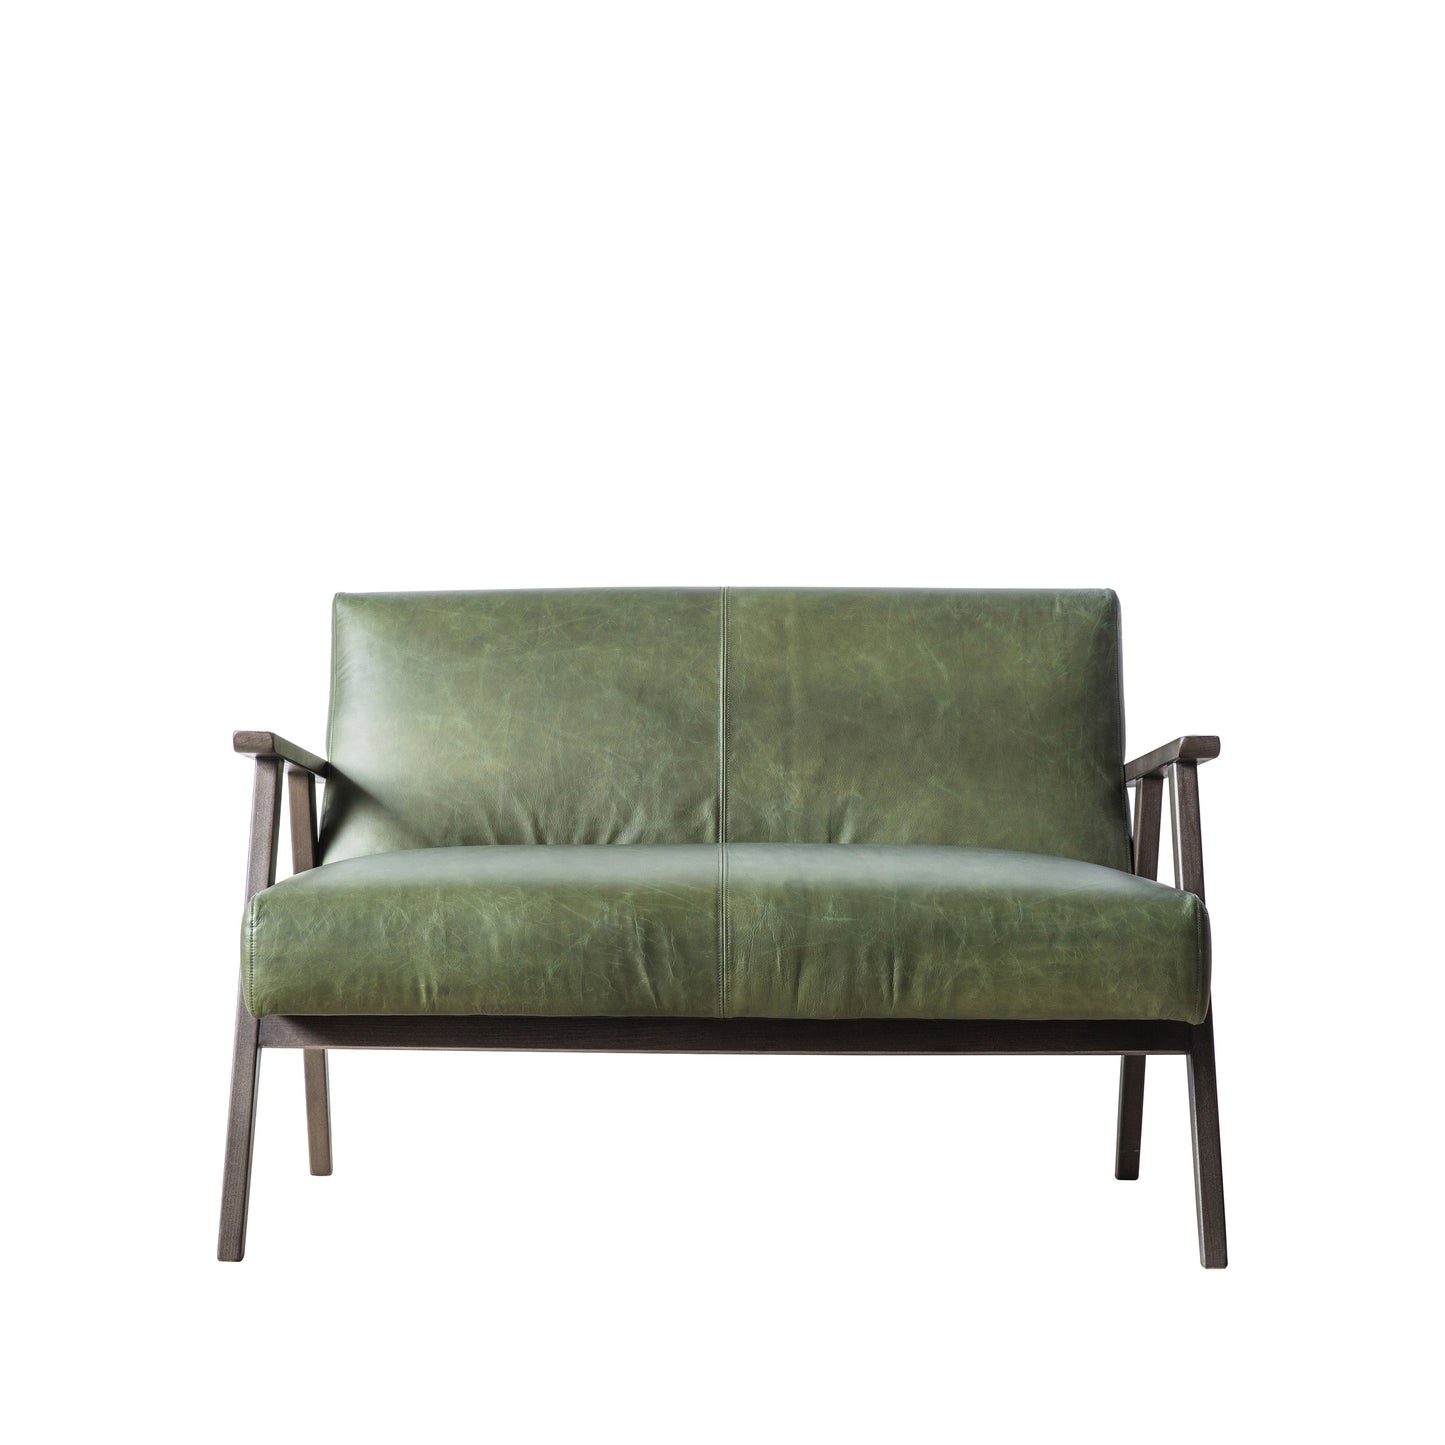 Neyland 2 Seater Sofa Heritage Green Leather